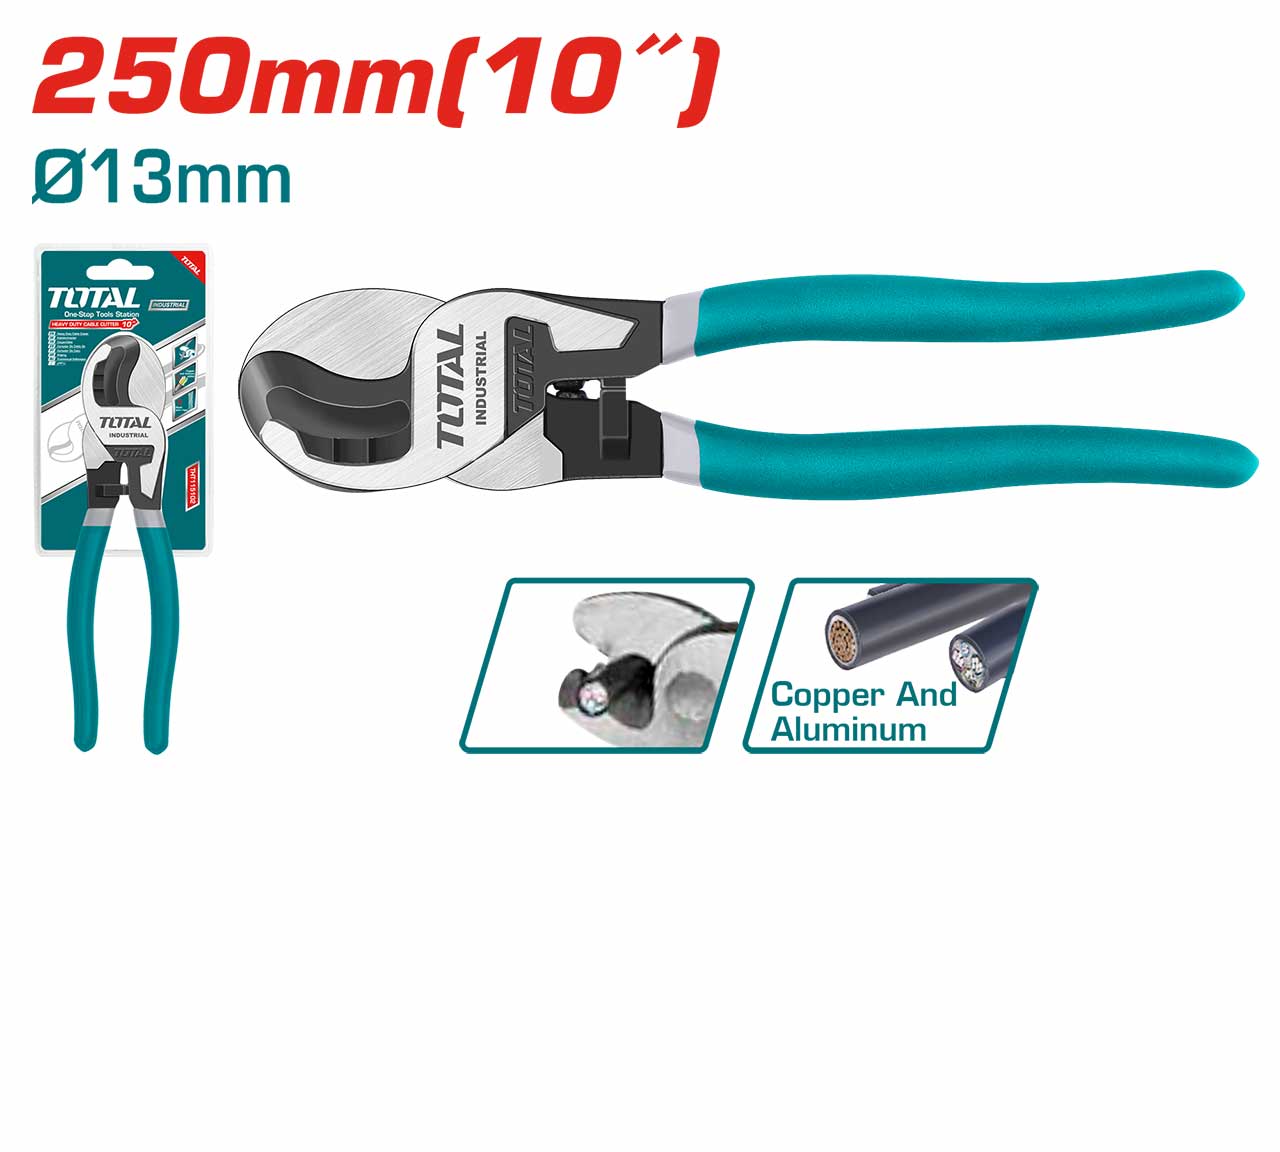 Ножницы для резки кабеля Total THT115102 250мм